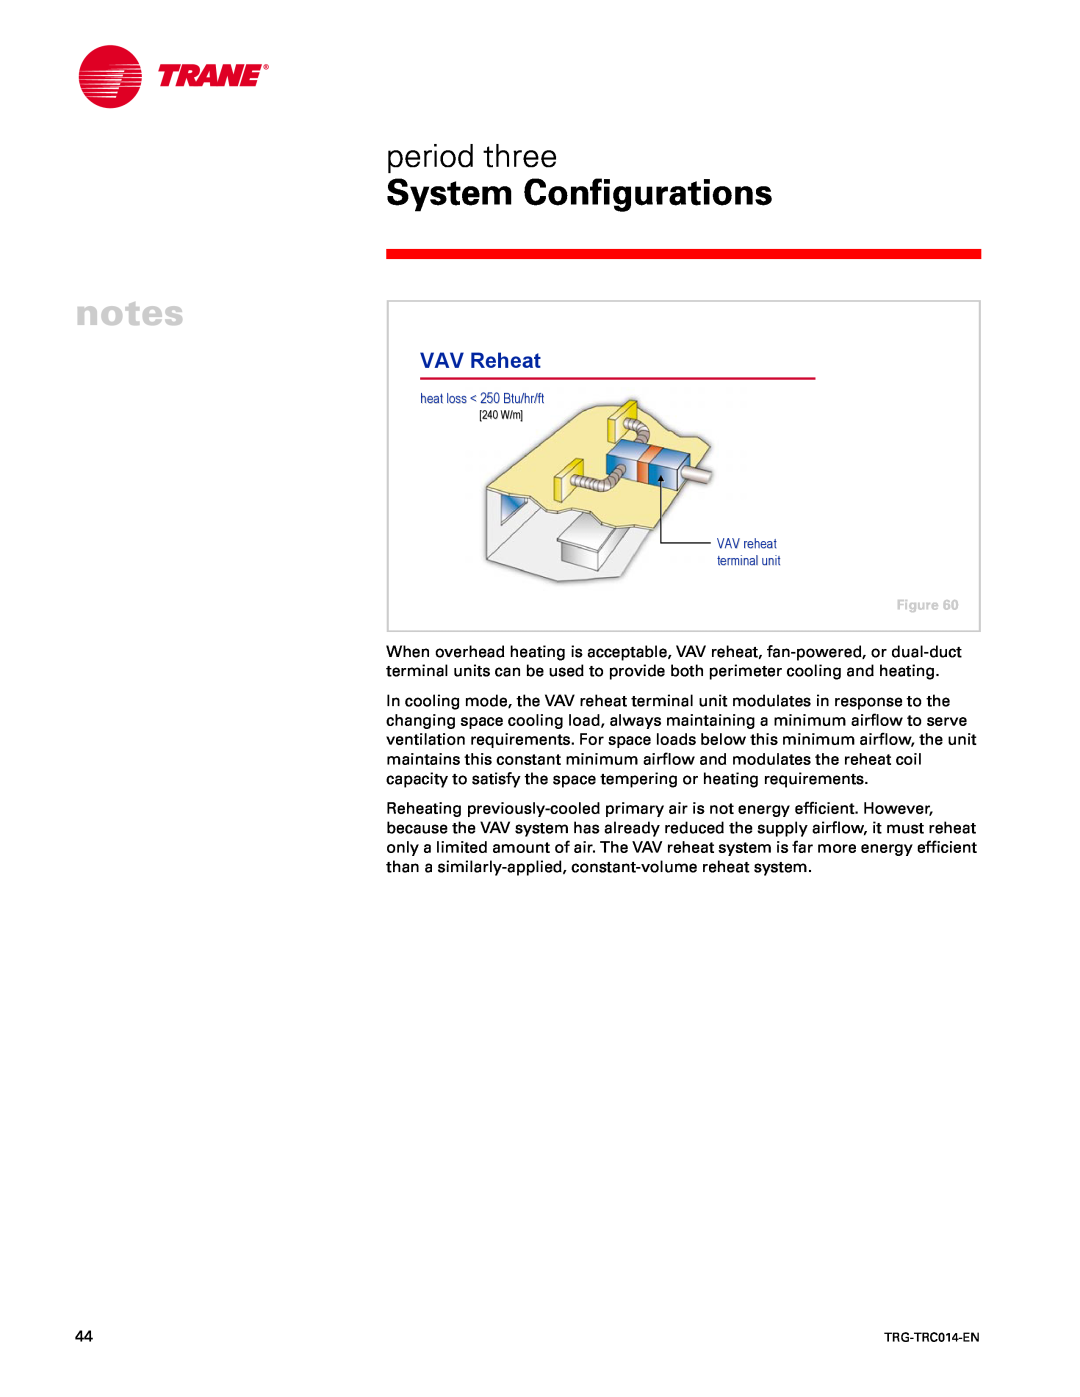 Trane TRG-TRC014-EN System Configurations, period three, VAV Reheat, heat loss 250 Btu/hr/ft, VAV reheat terminal unit 